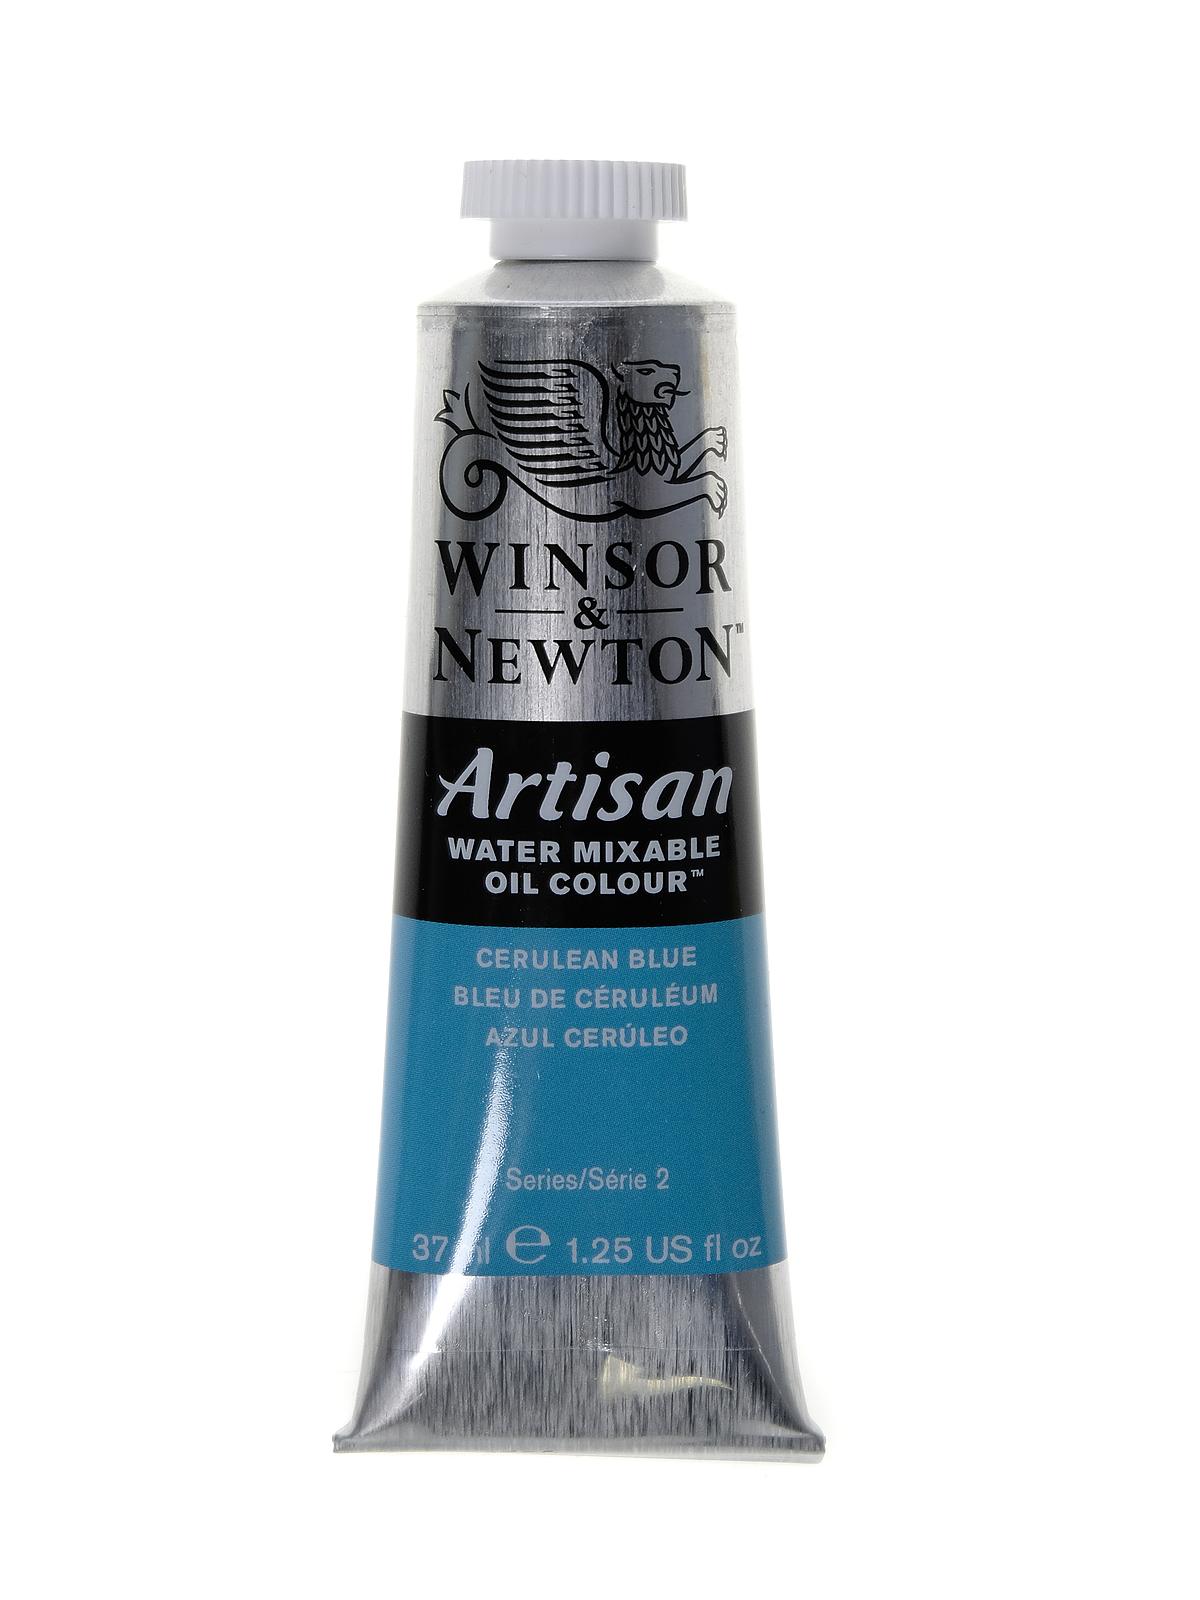 WINSOR & NEWTON Artisan Water Mixable Oil Colours